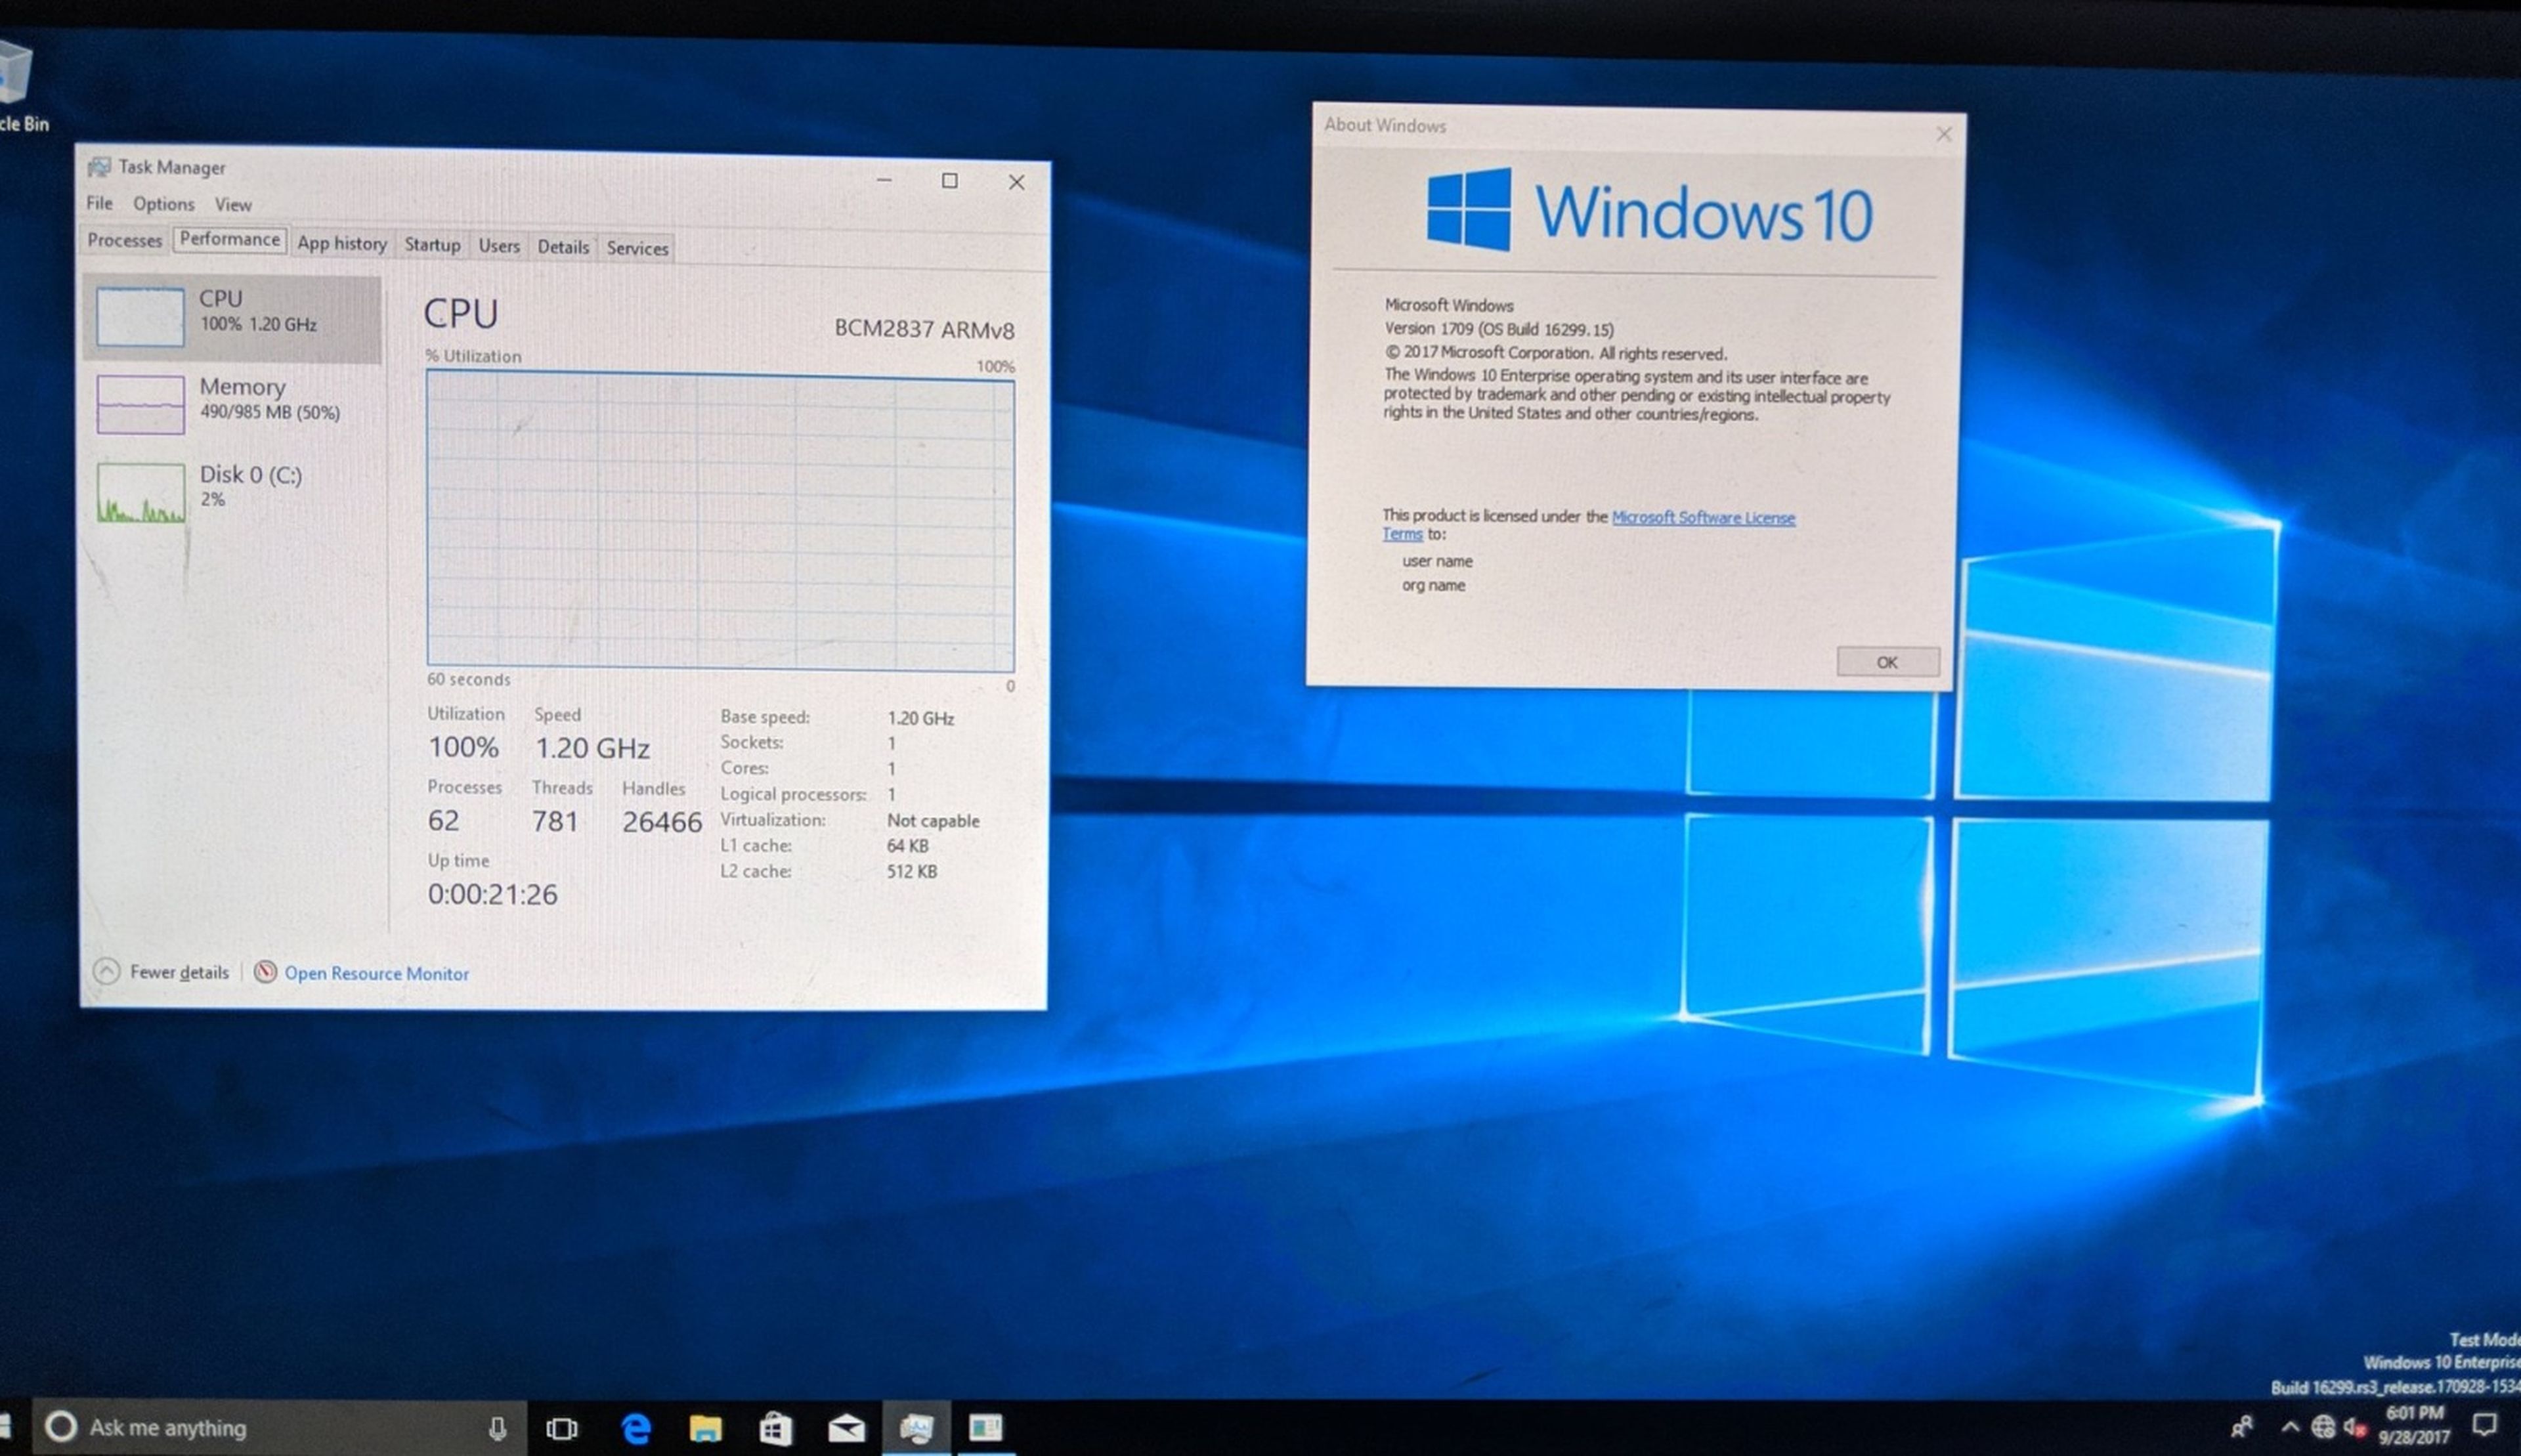 Un momento, ¿Windows 10 funcional en una Raspberry Pi 3?